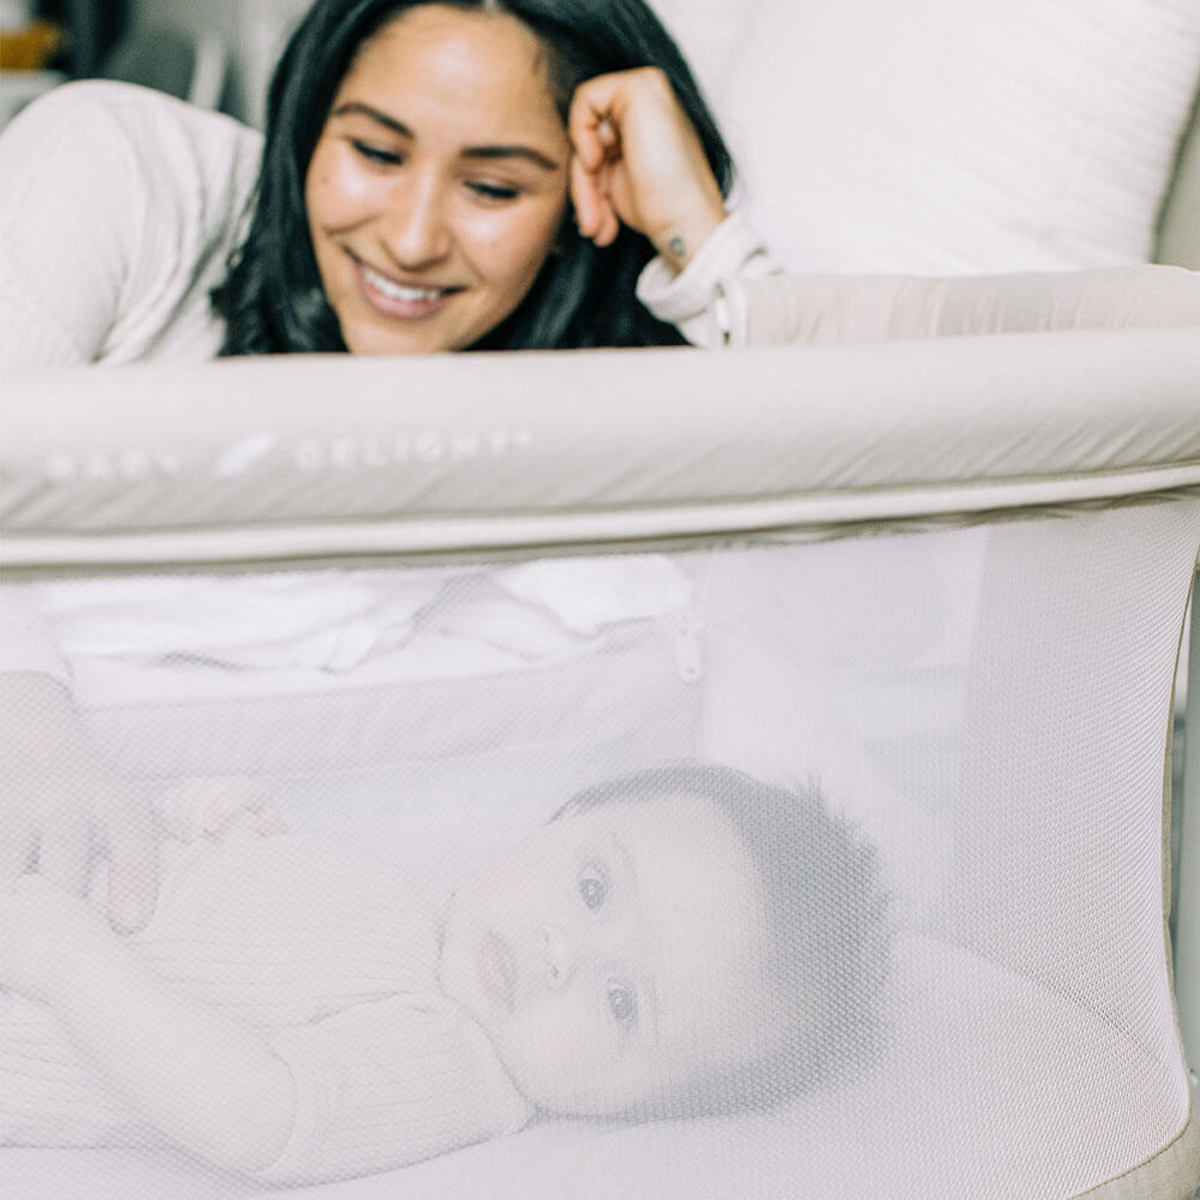 10 Newborn Necessities & The Best Items For Your Baby Registry